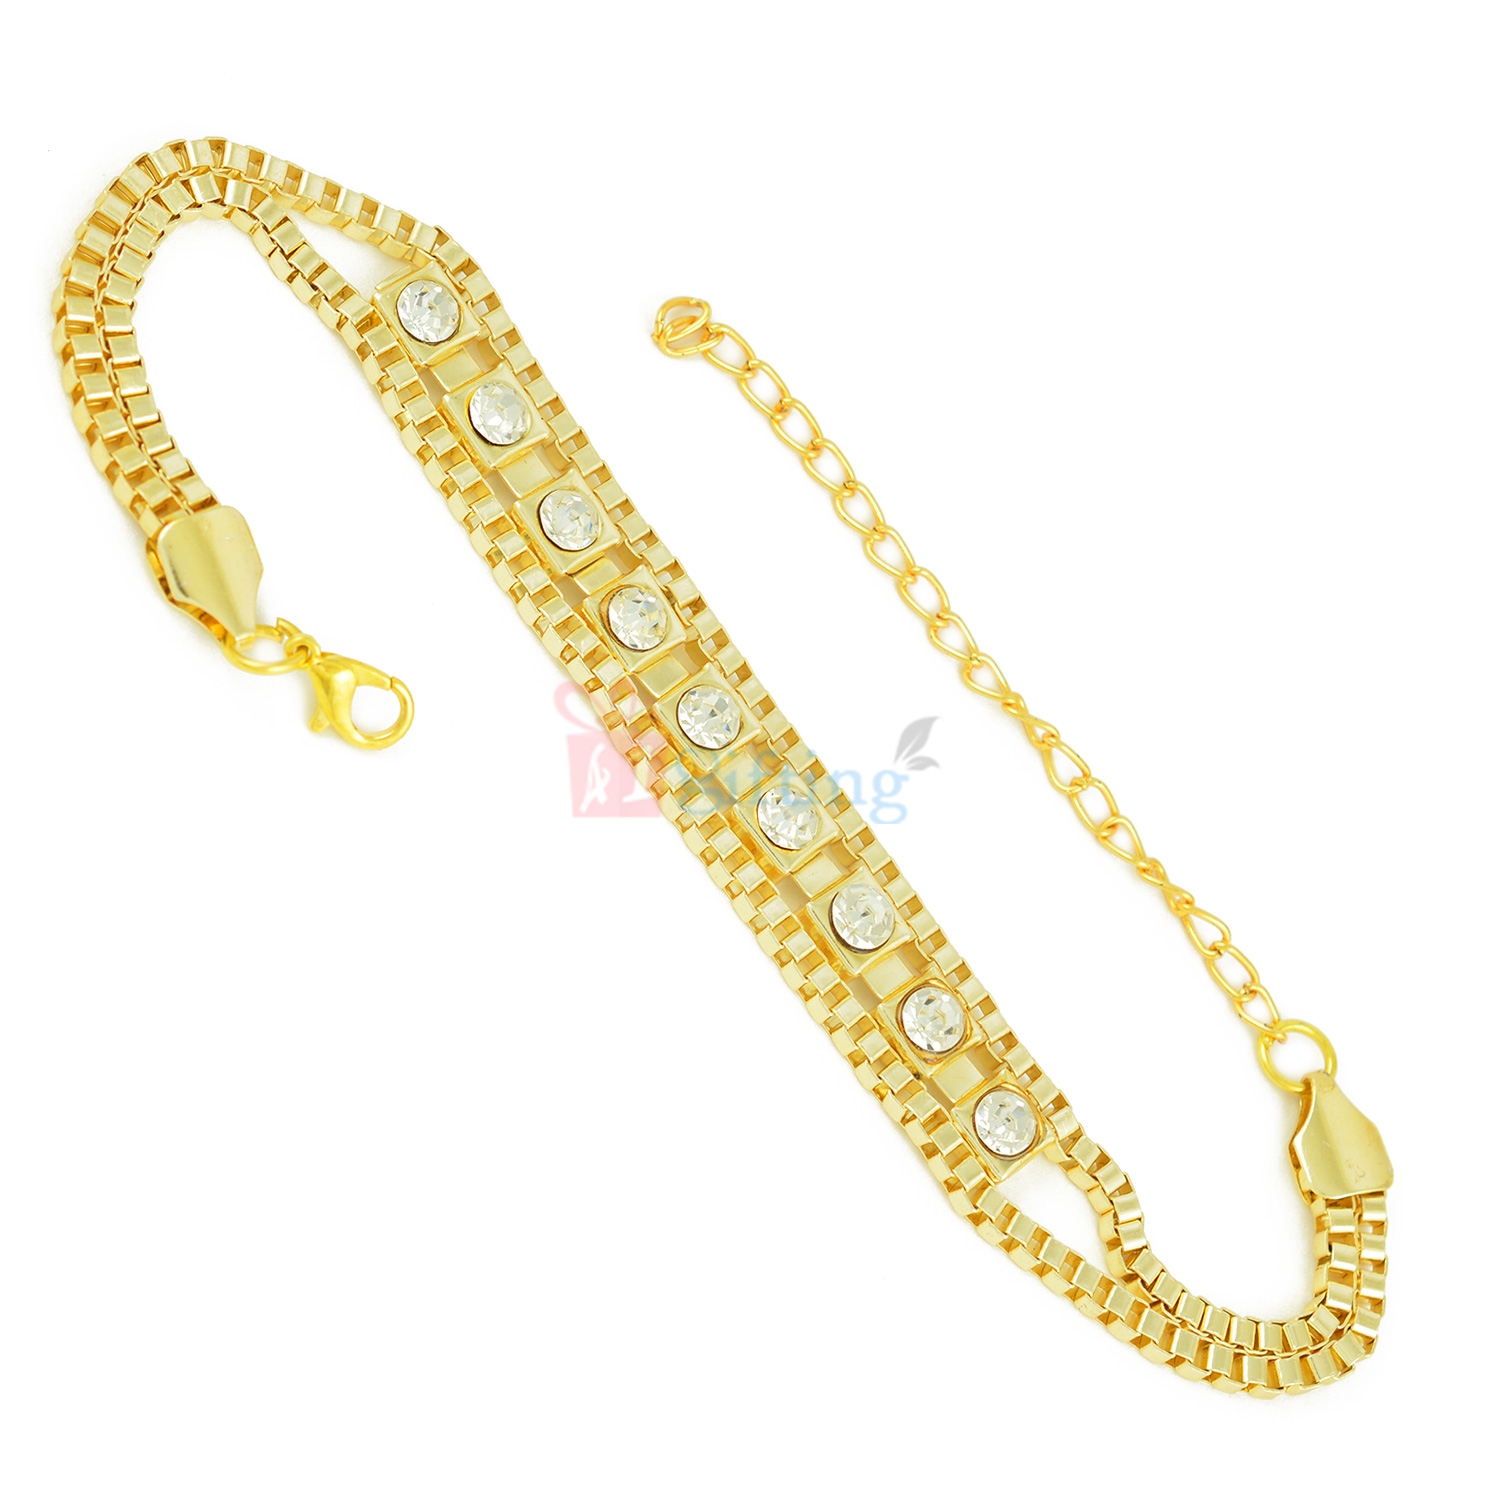 Kadi-daar Silver Chain Crafted as Golden Rakhi Bracelet